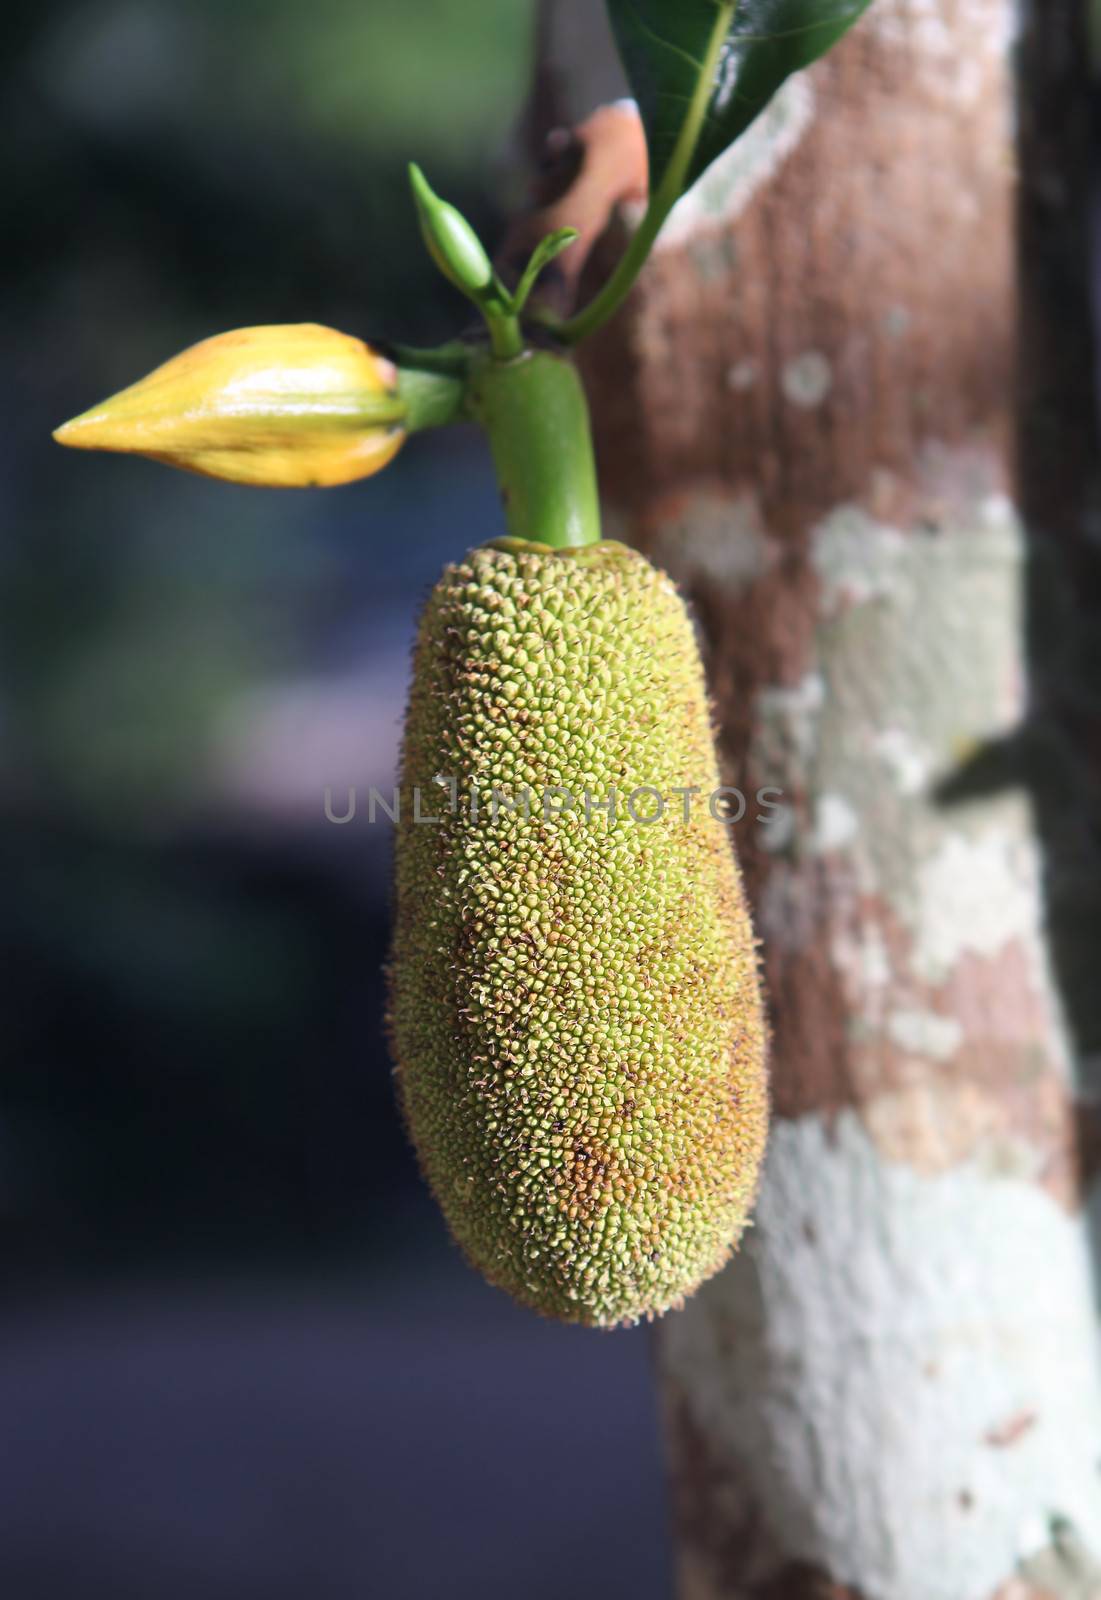 jackfruit by ssuaphoto